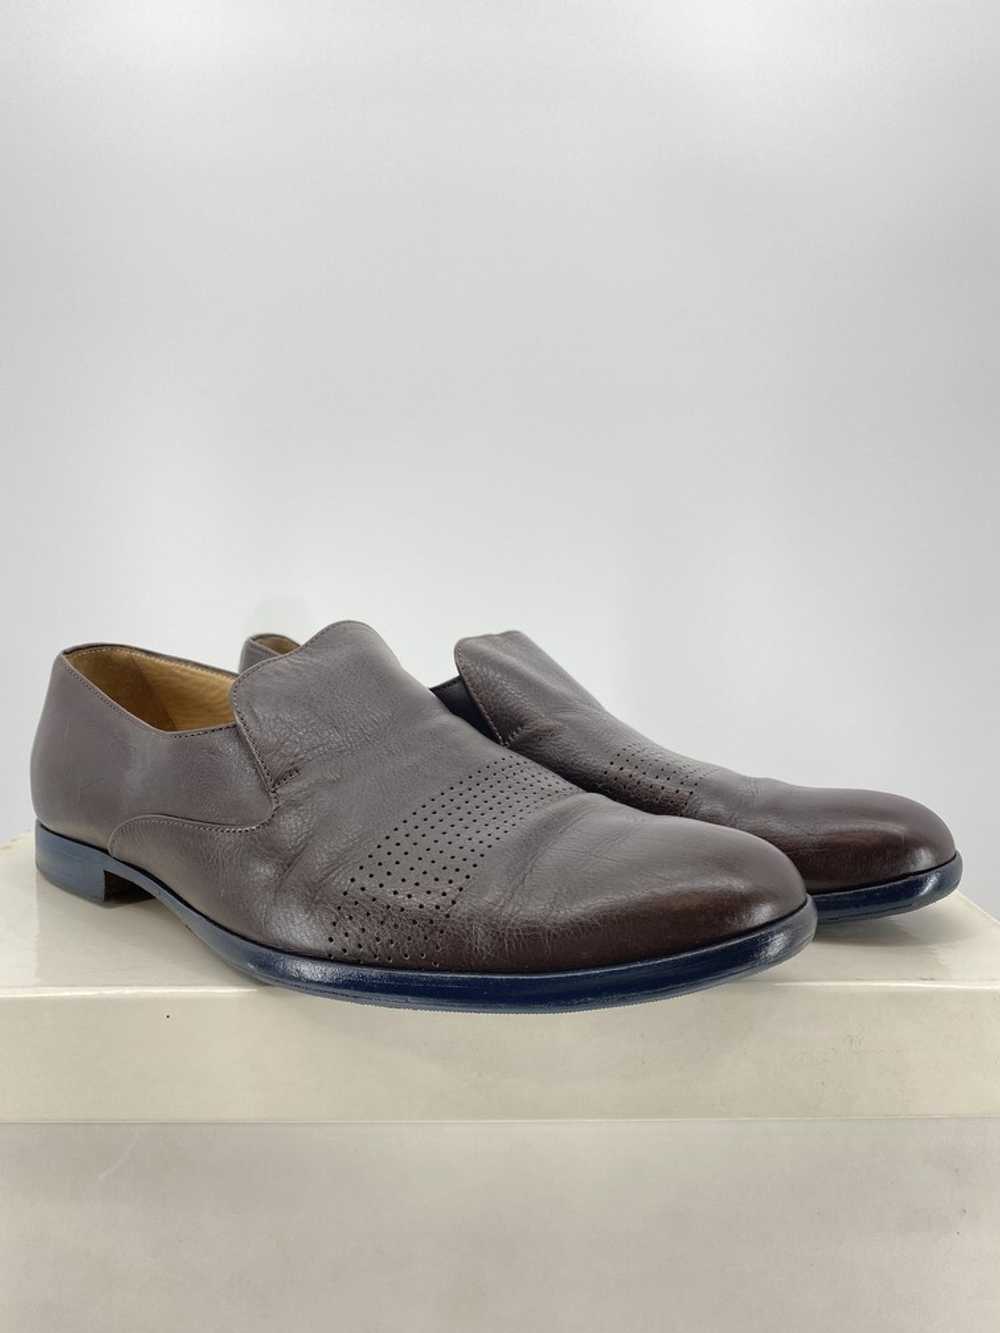 Dries Van Noten Brown Leather Loafers - image 4